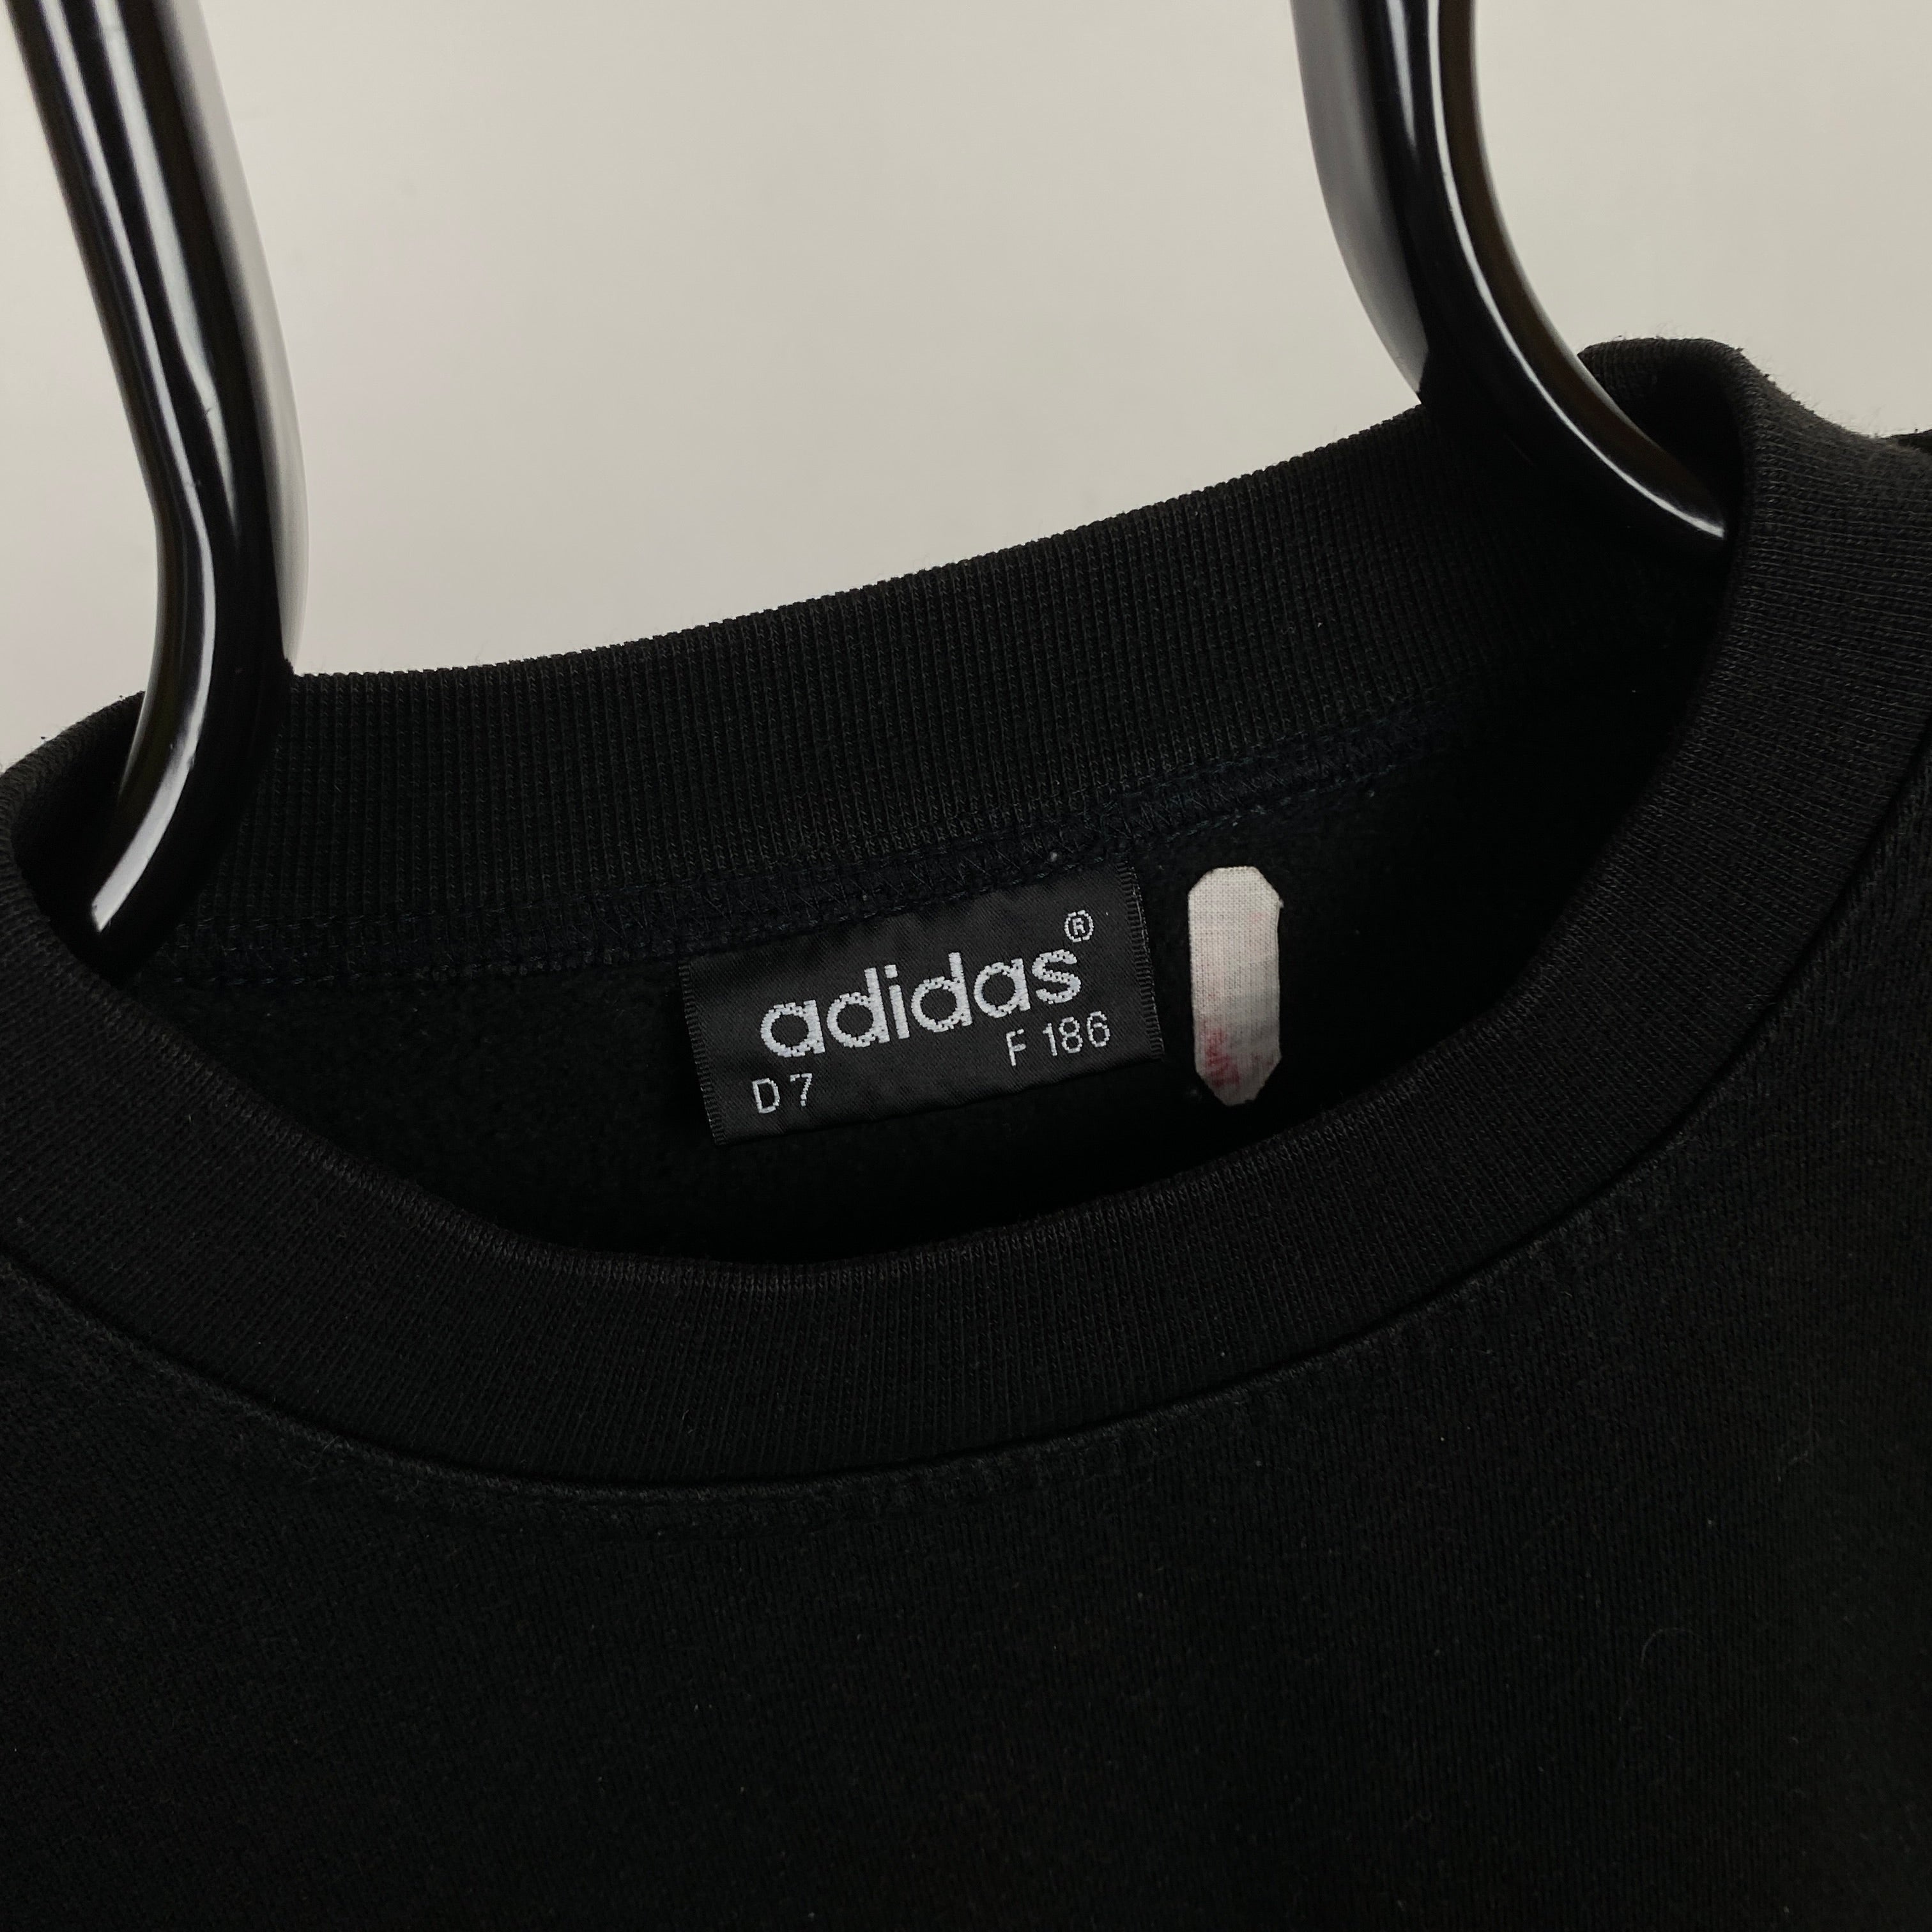 90s Adidas Sweatshirt Black Large